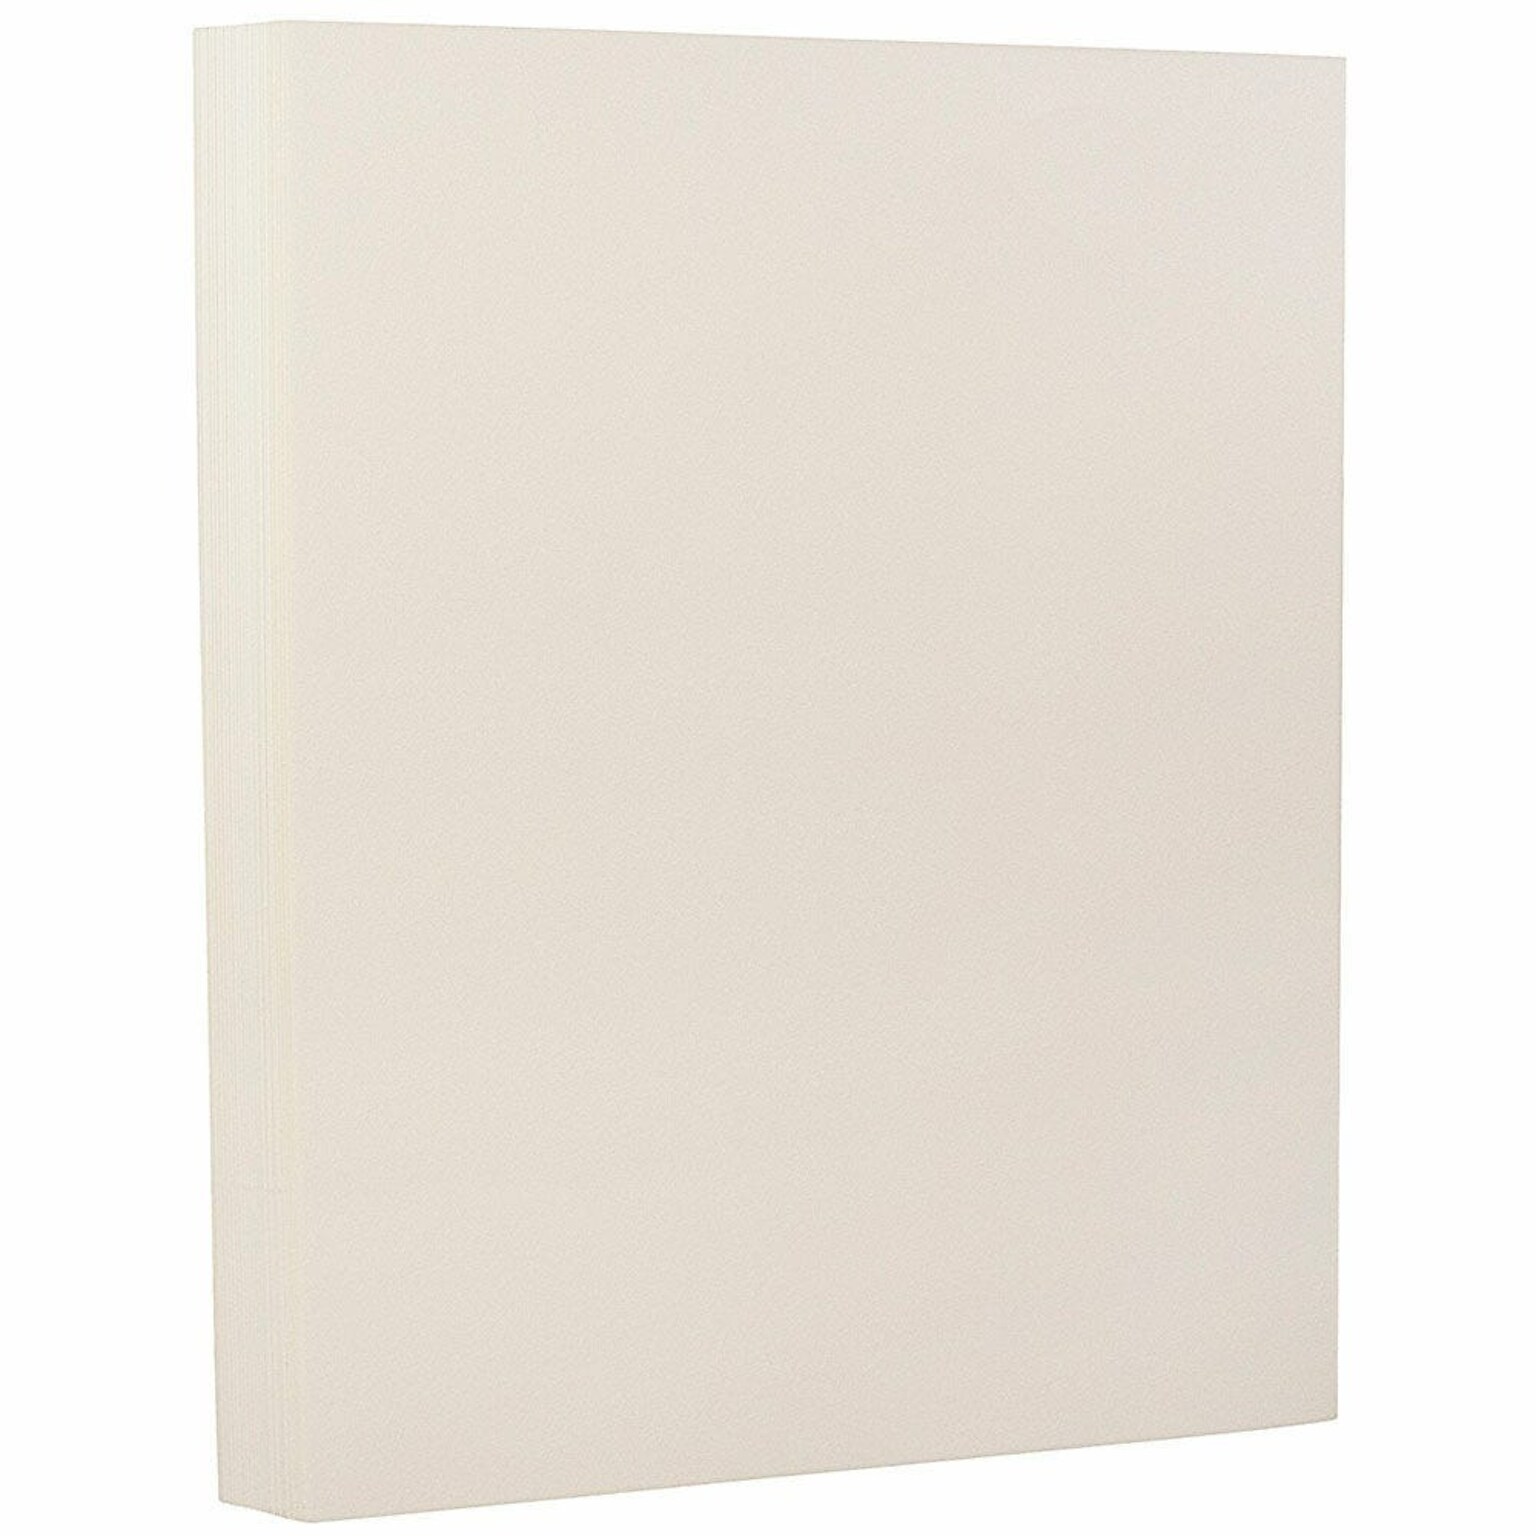 JAM PAPER 8.5 x 11 Strathmore Cardstock, 88lb, Natural White Wove, 100/pack  (301115G)